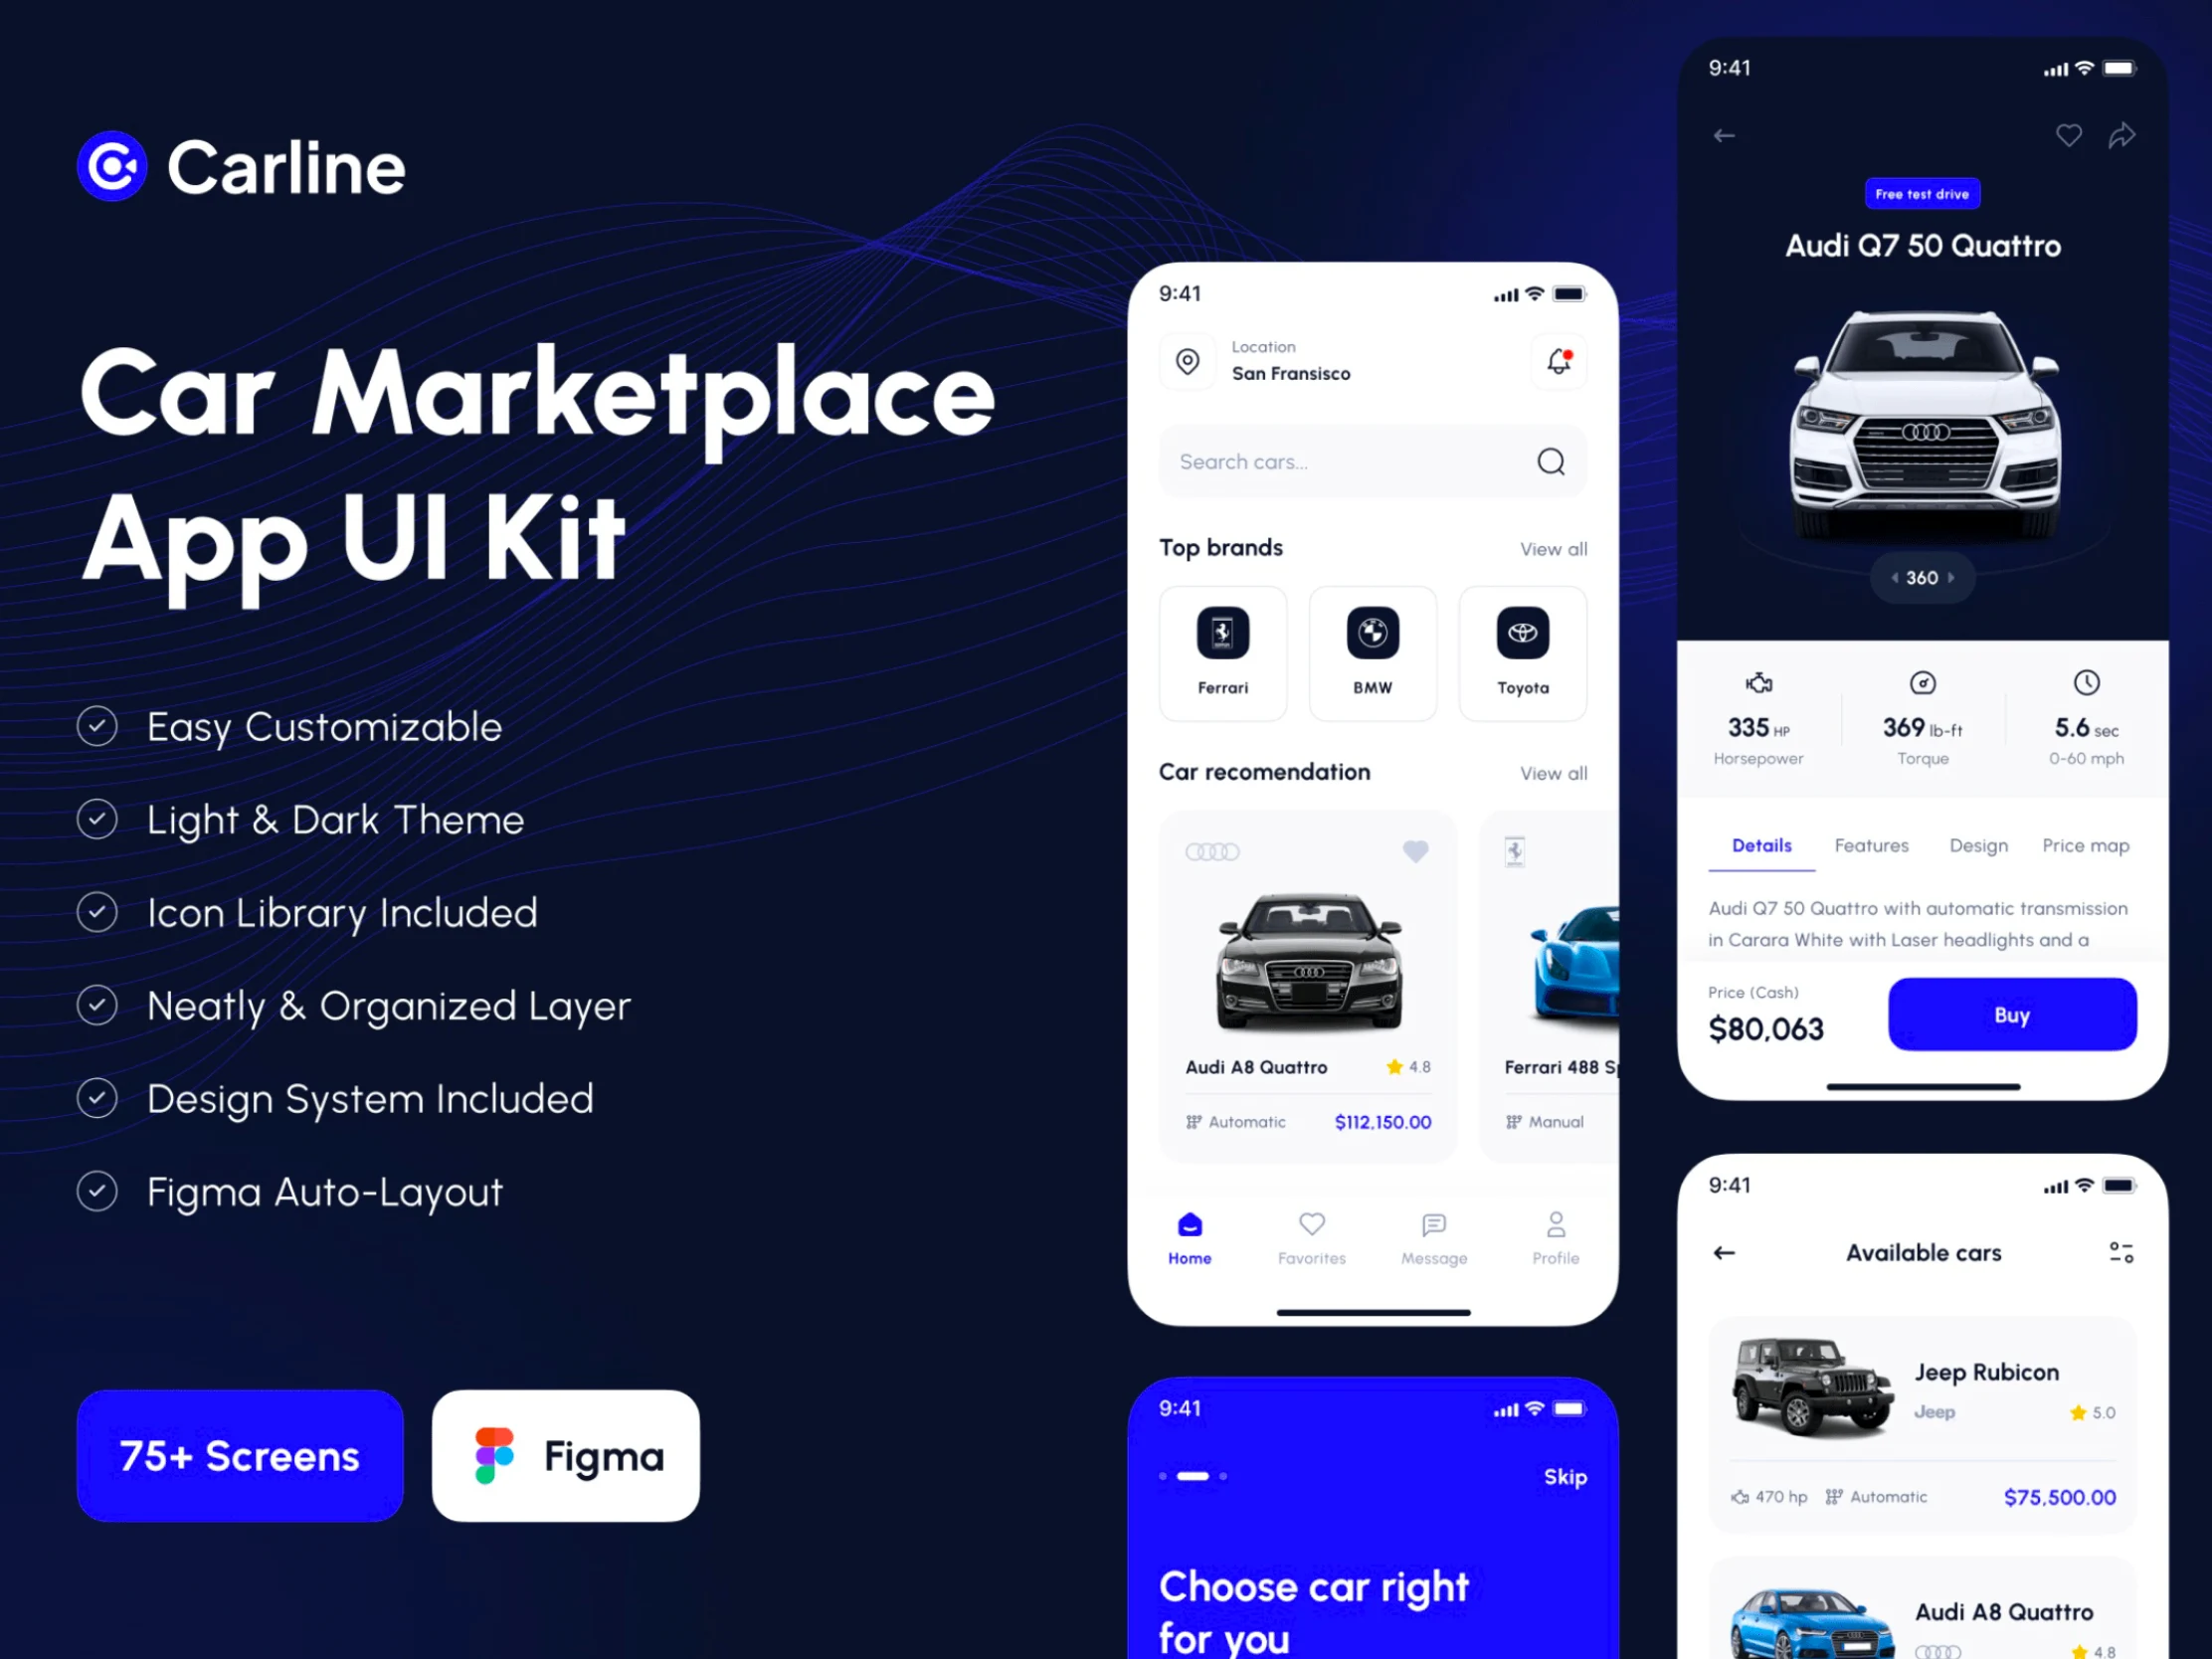 [VIP] Carline: Car Marketplace App UI Kit